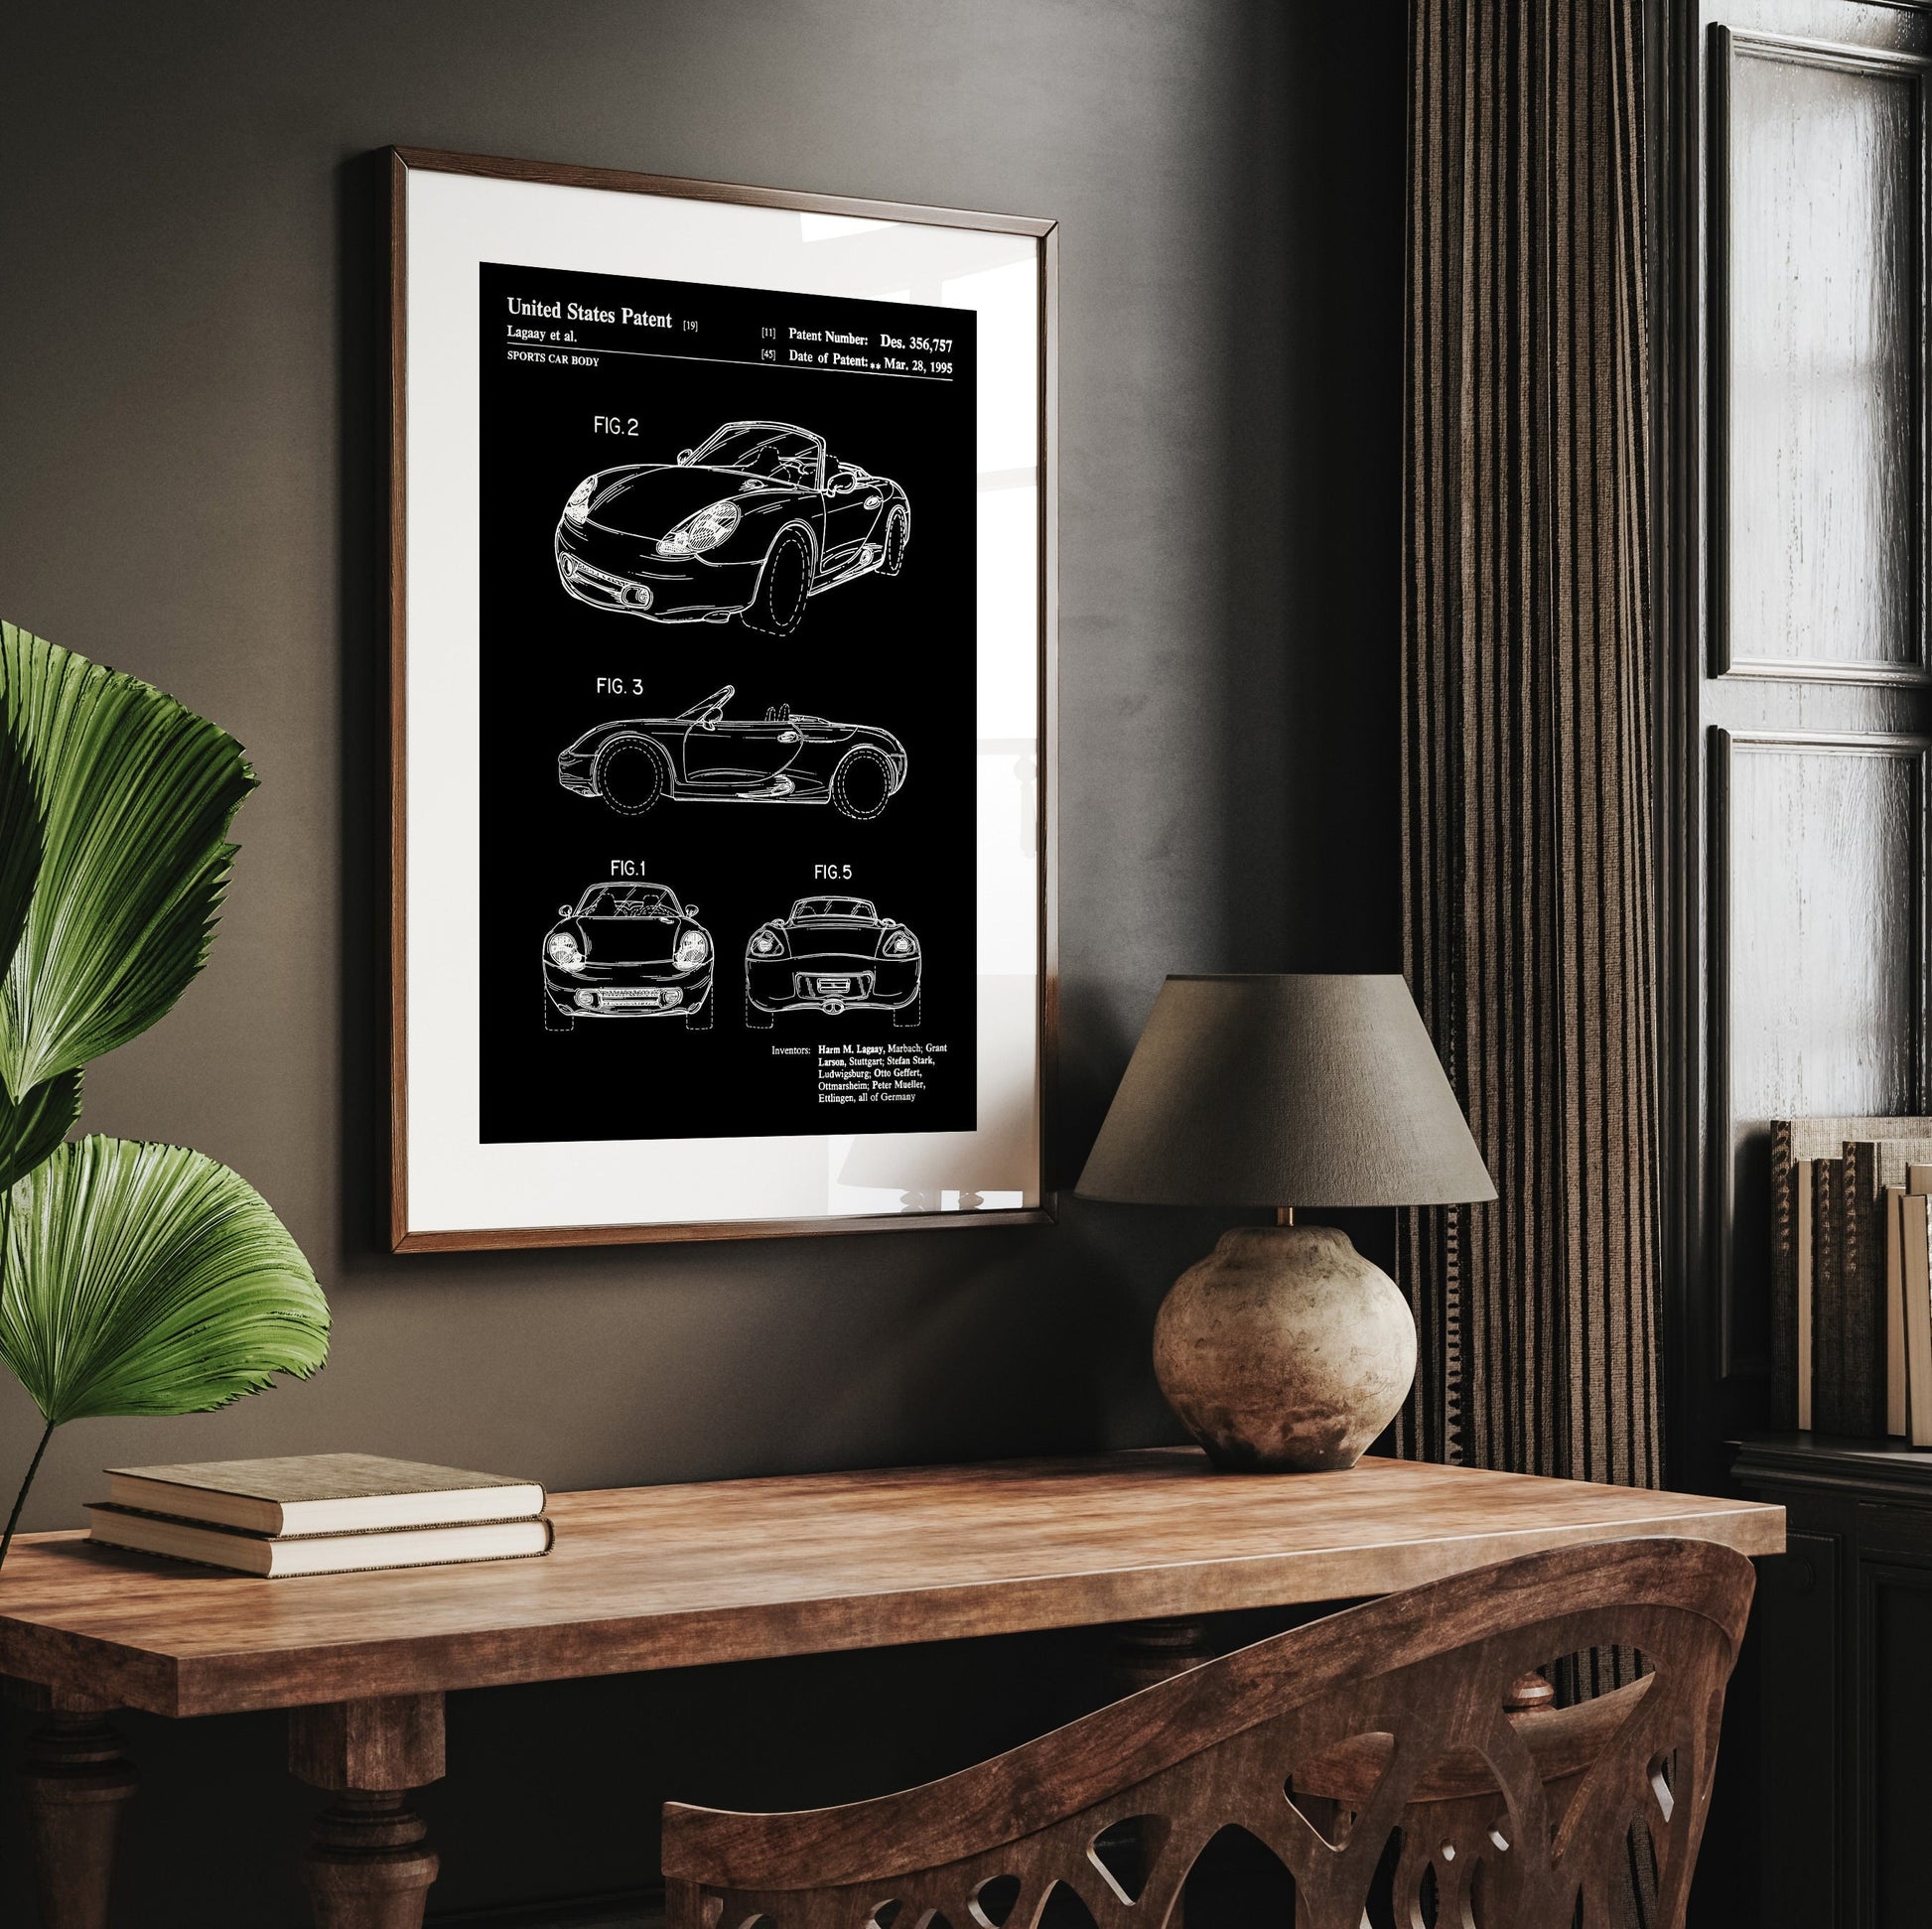 Porsche Boxster 1995 Patent Print - Magic Posters